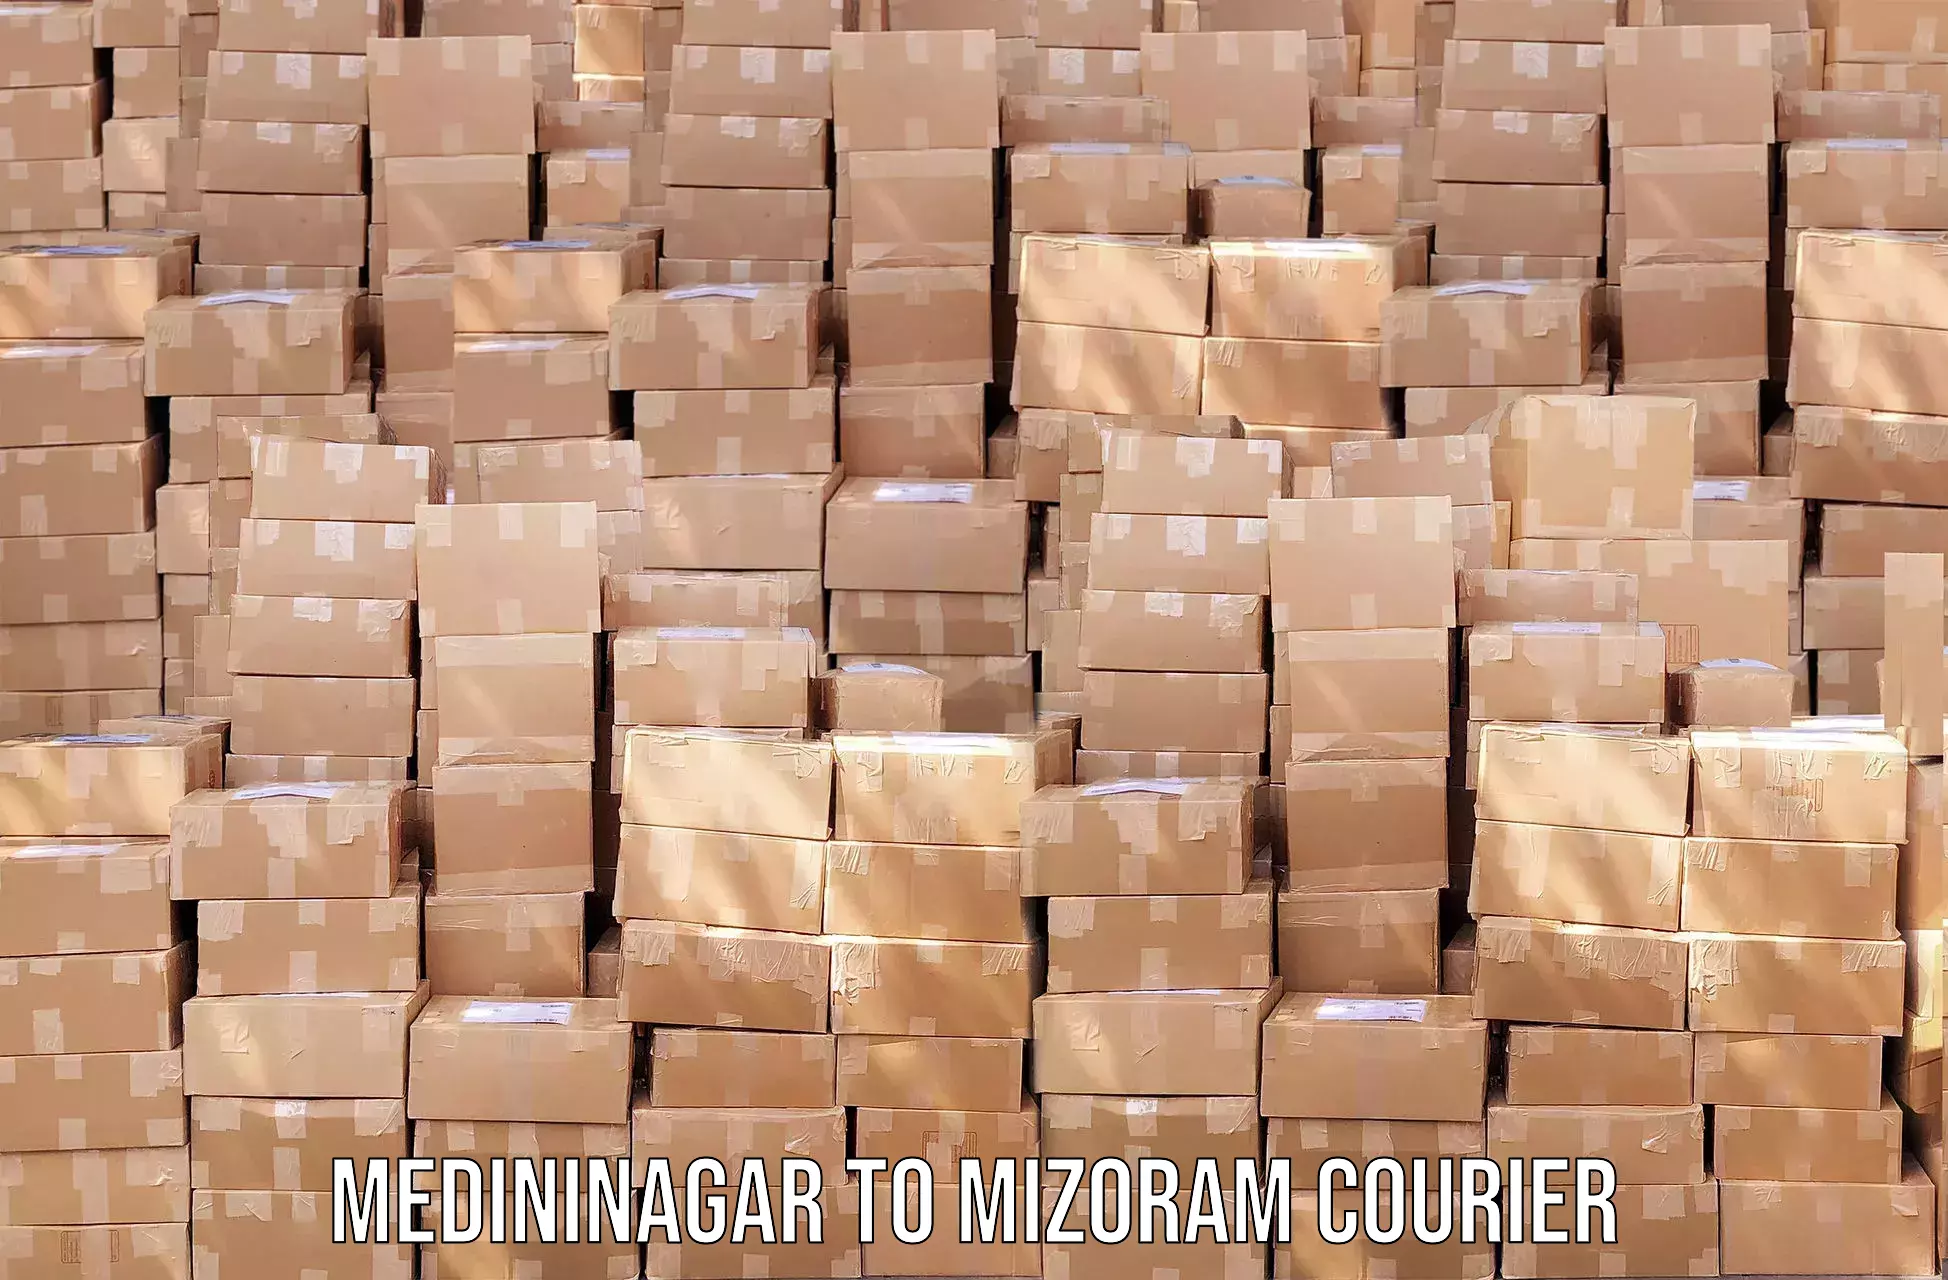 Courier insurance Medininagar to Mizoram